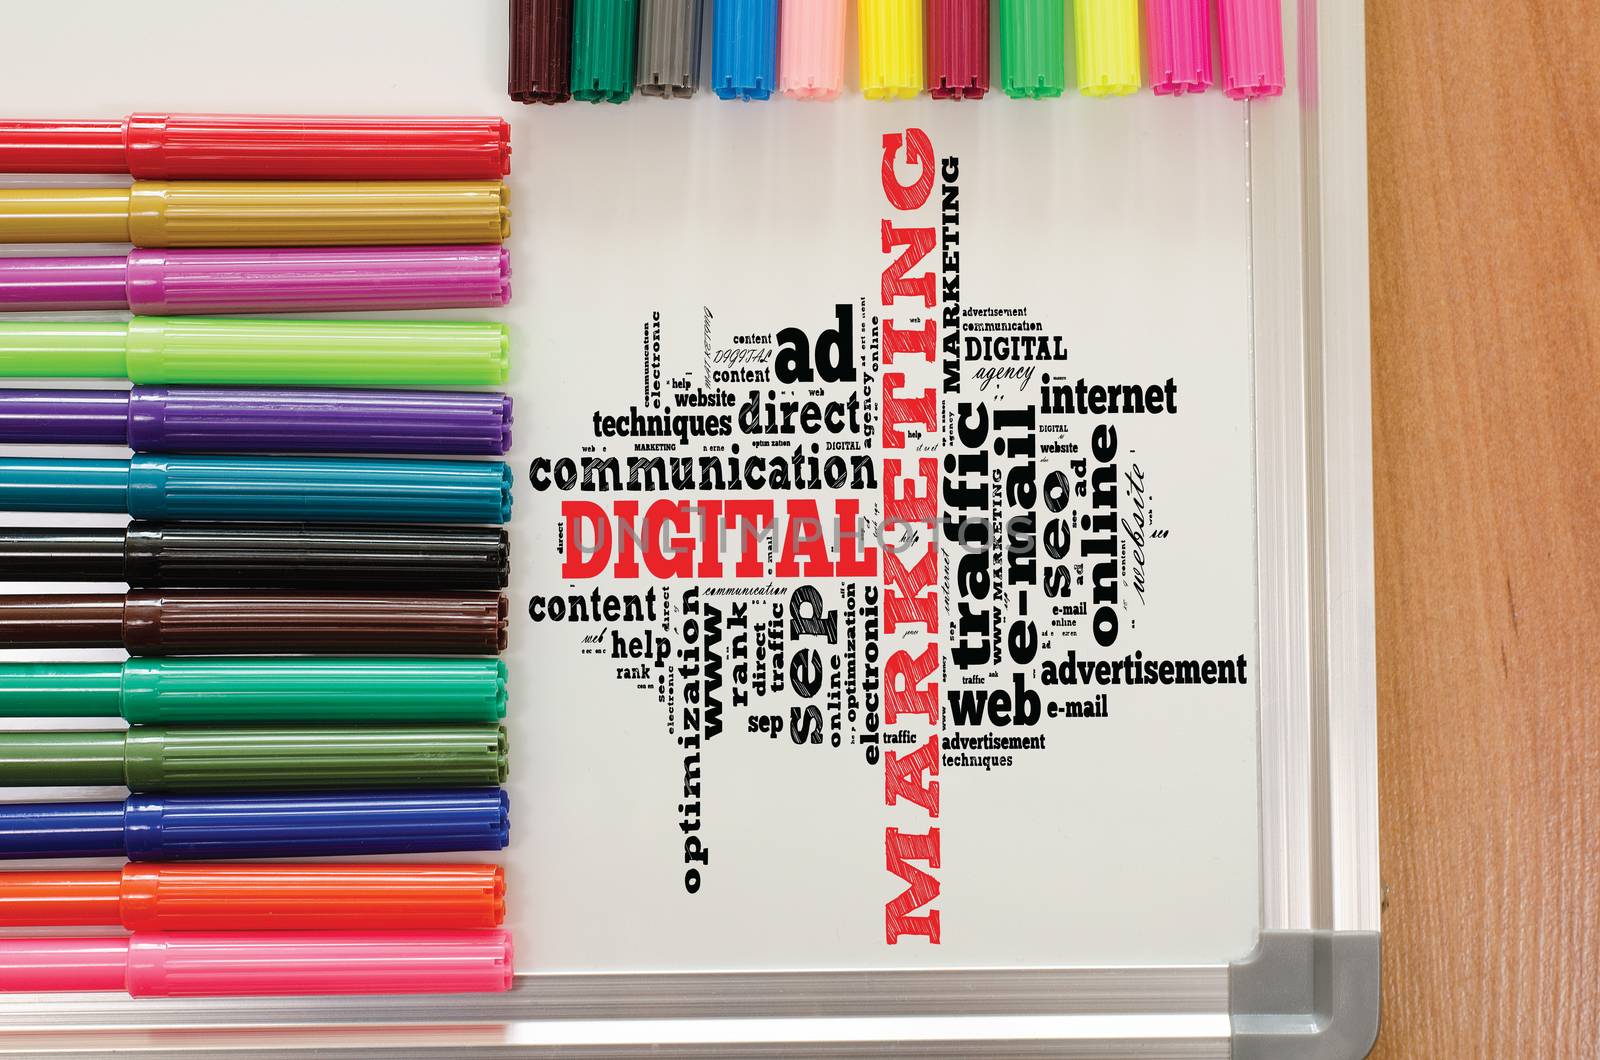 Digital marketing word cloud on the whiteboard by eenevski